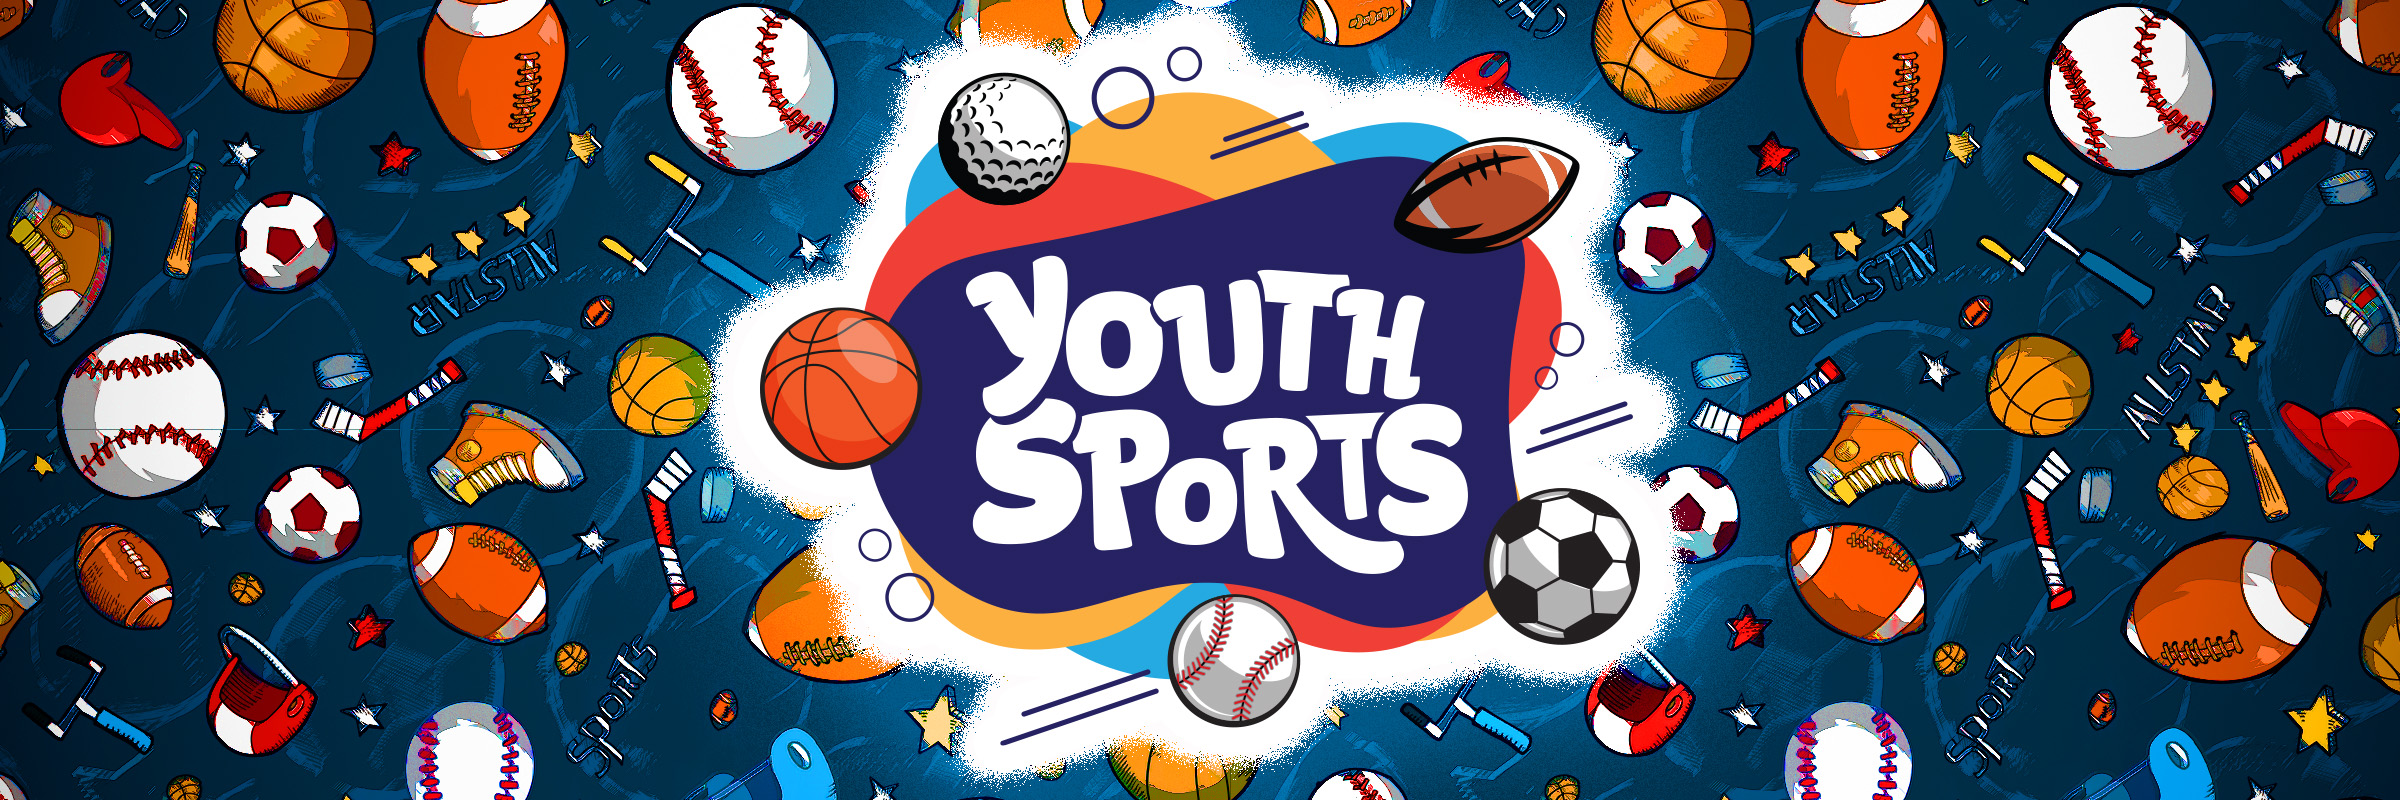 Youth Sports Web Banner.jpg